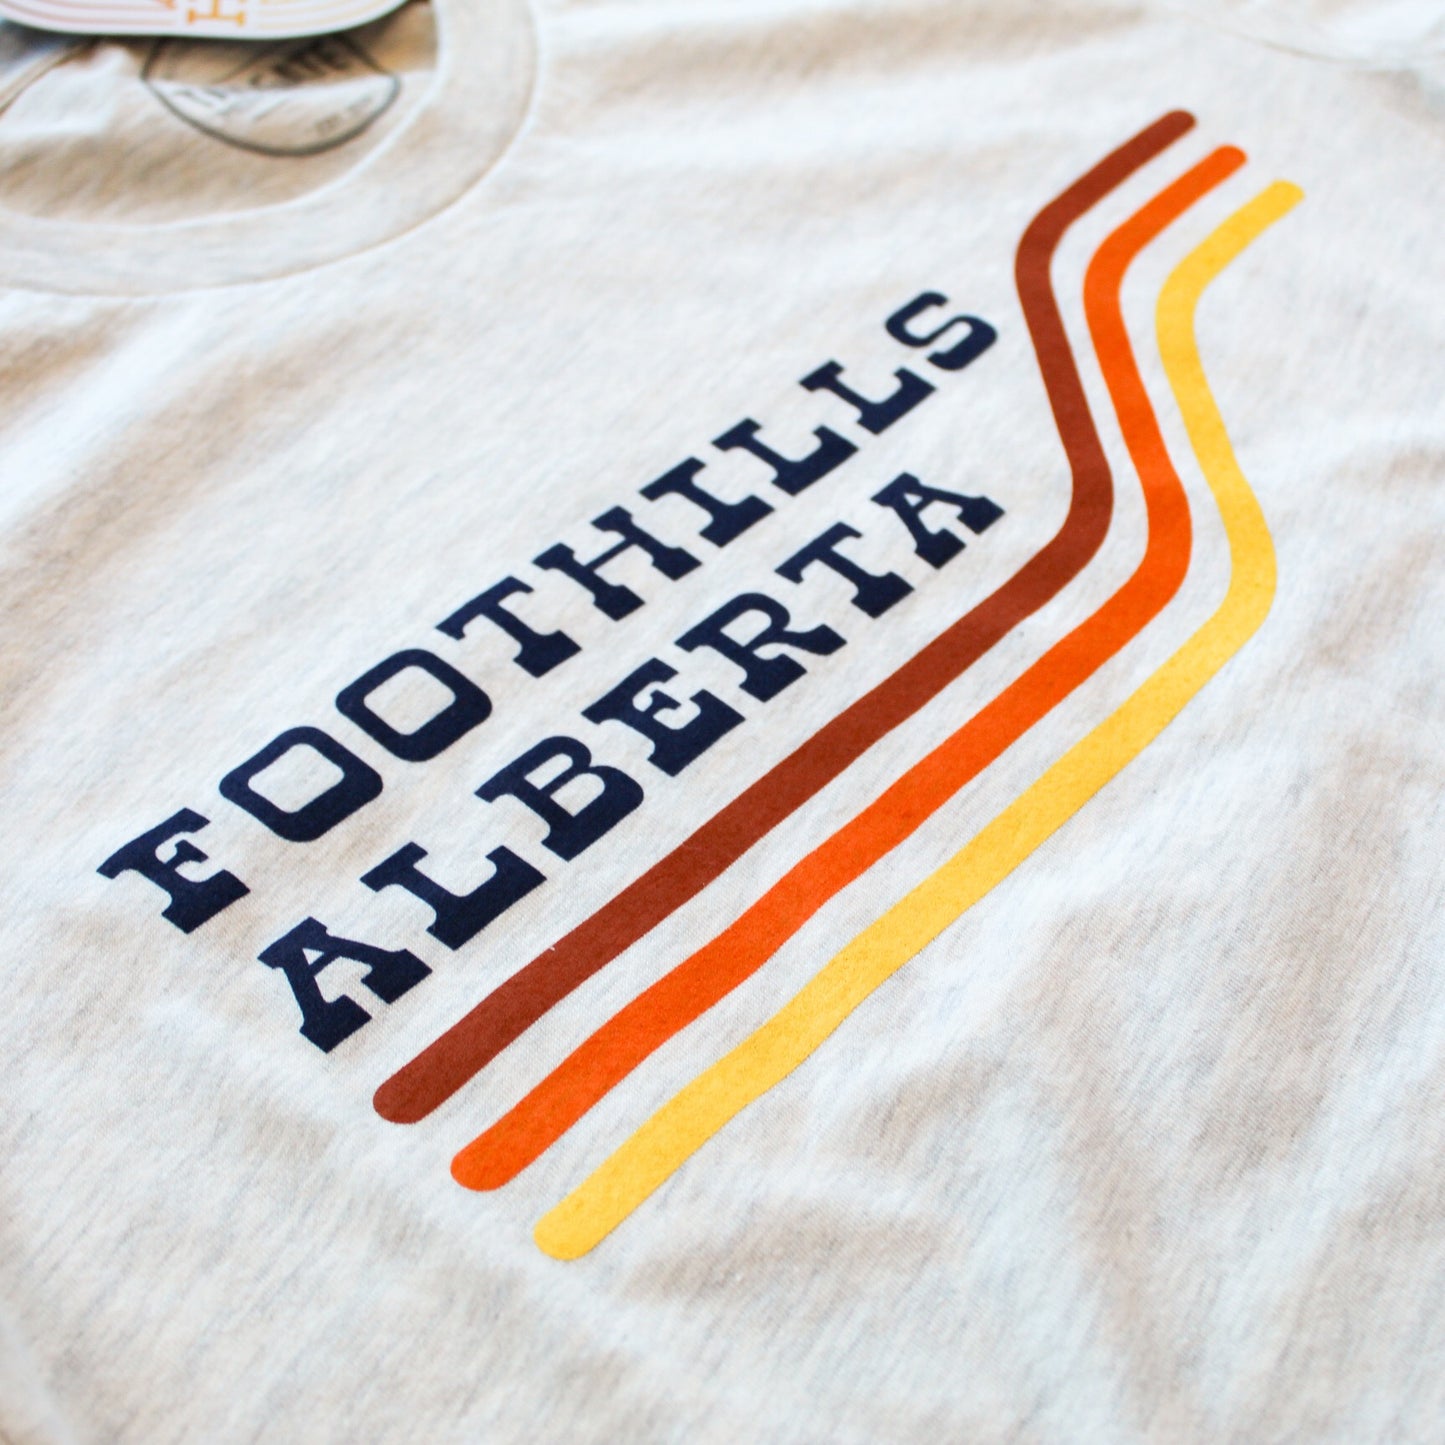 Exclusive t-shirt foothills Alberta unisex tee shirt